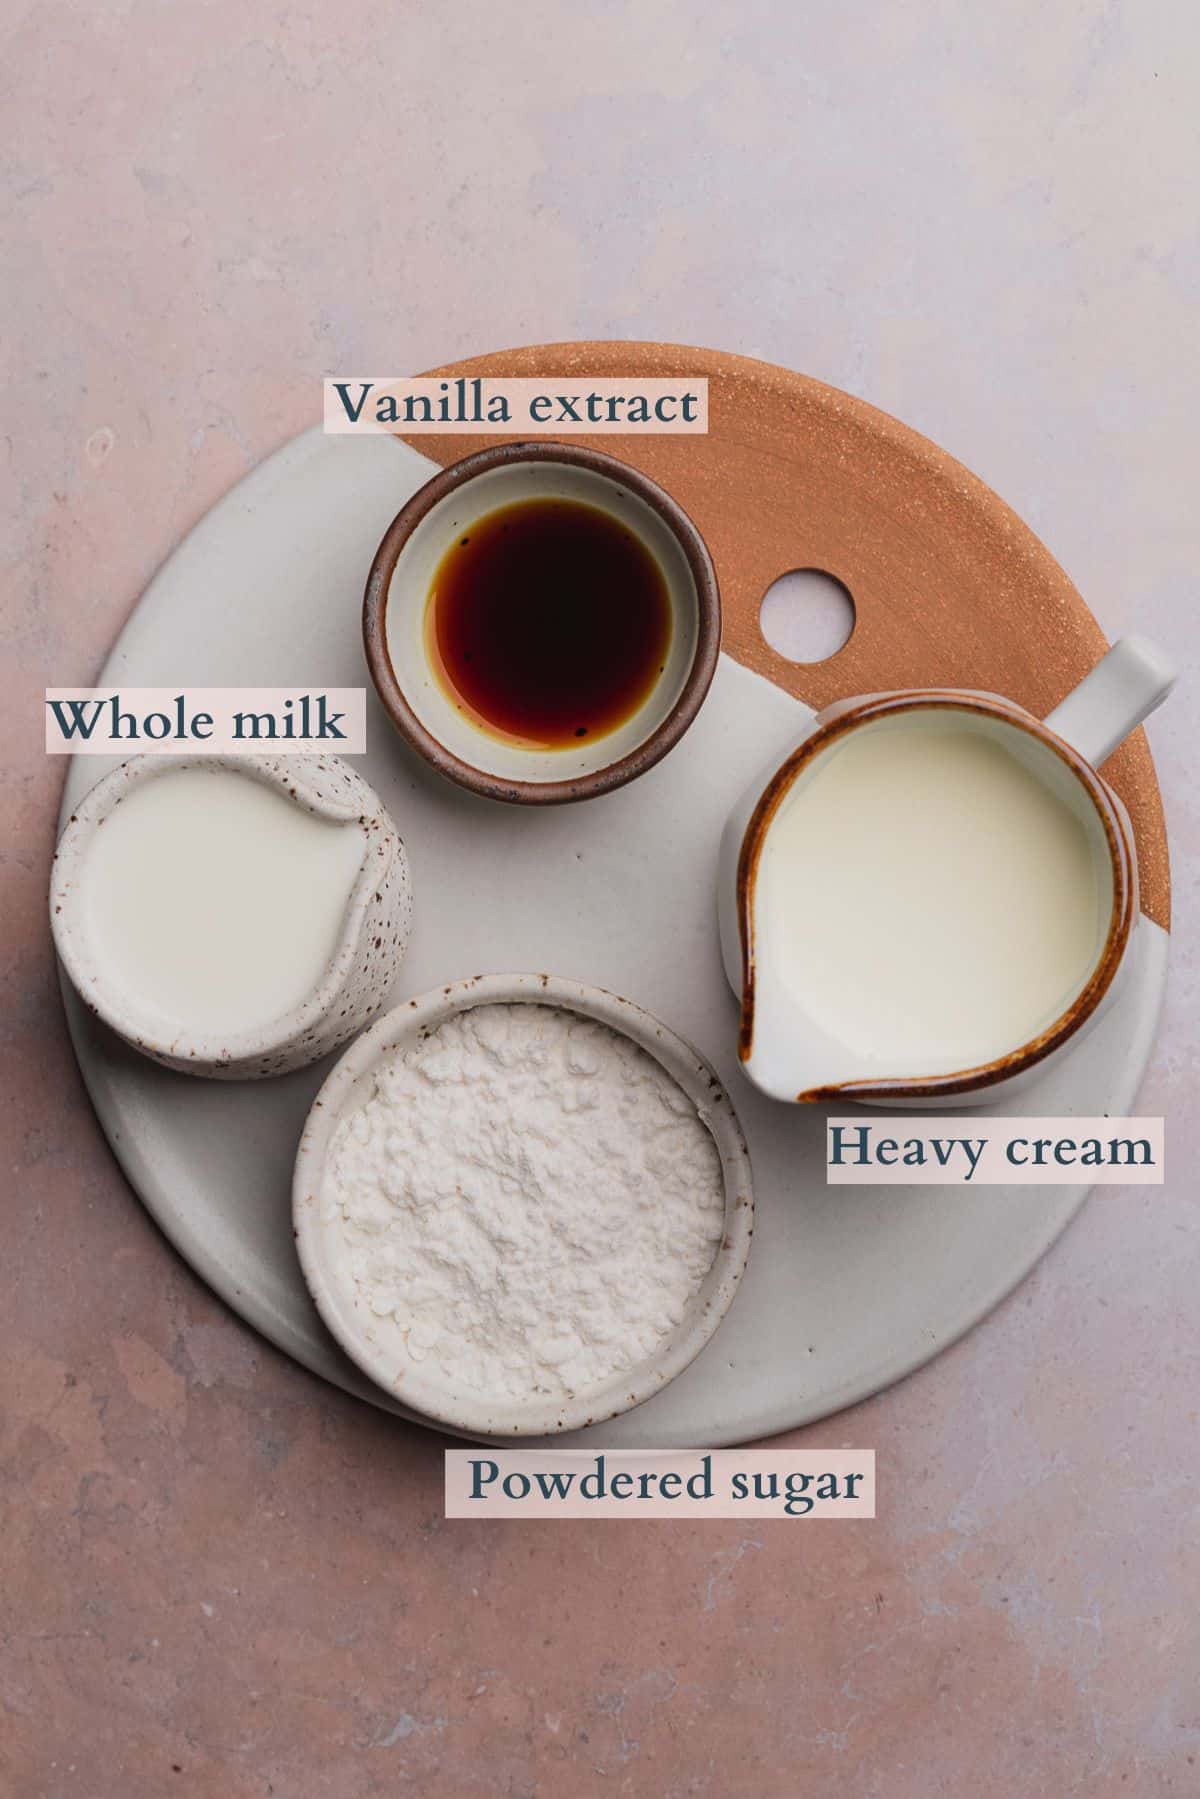 vanilla sweet cream cold foam ingredients graphic with text to denote heavy cream, whole milk, powdered sugar, and vanilla.